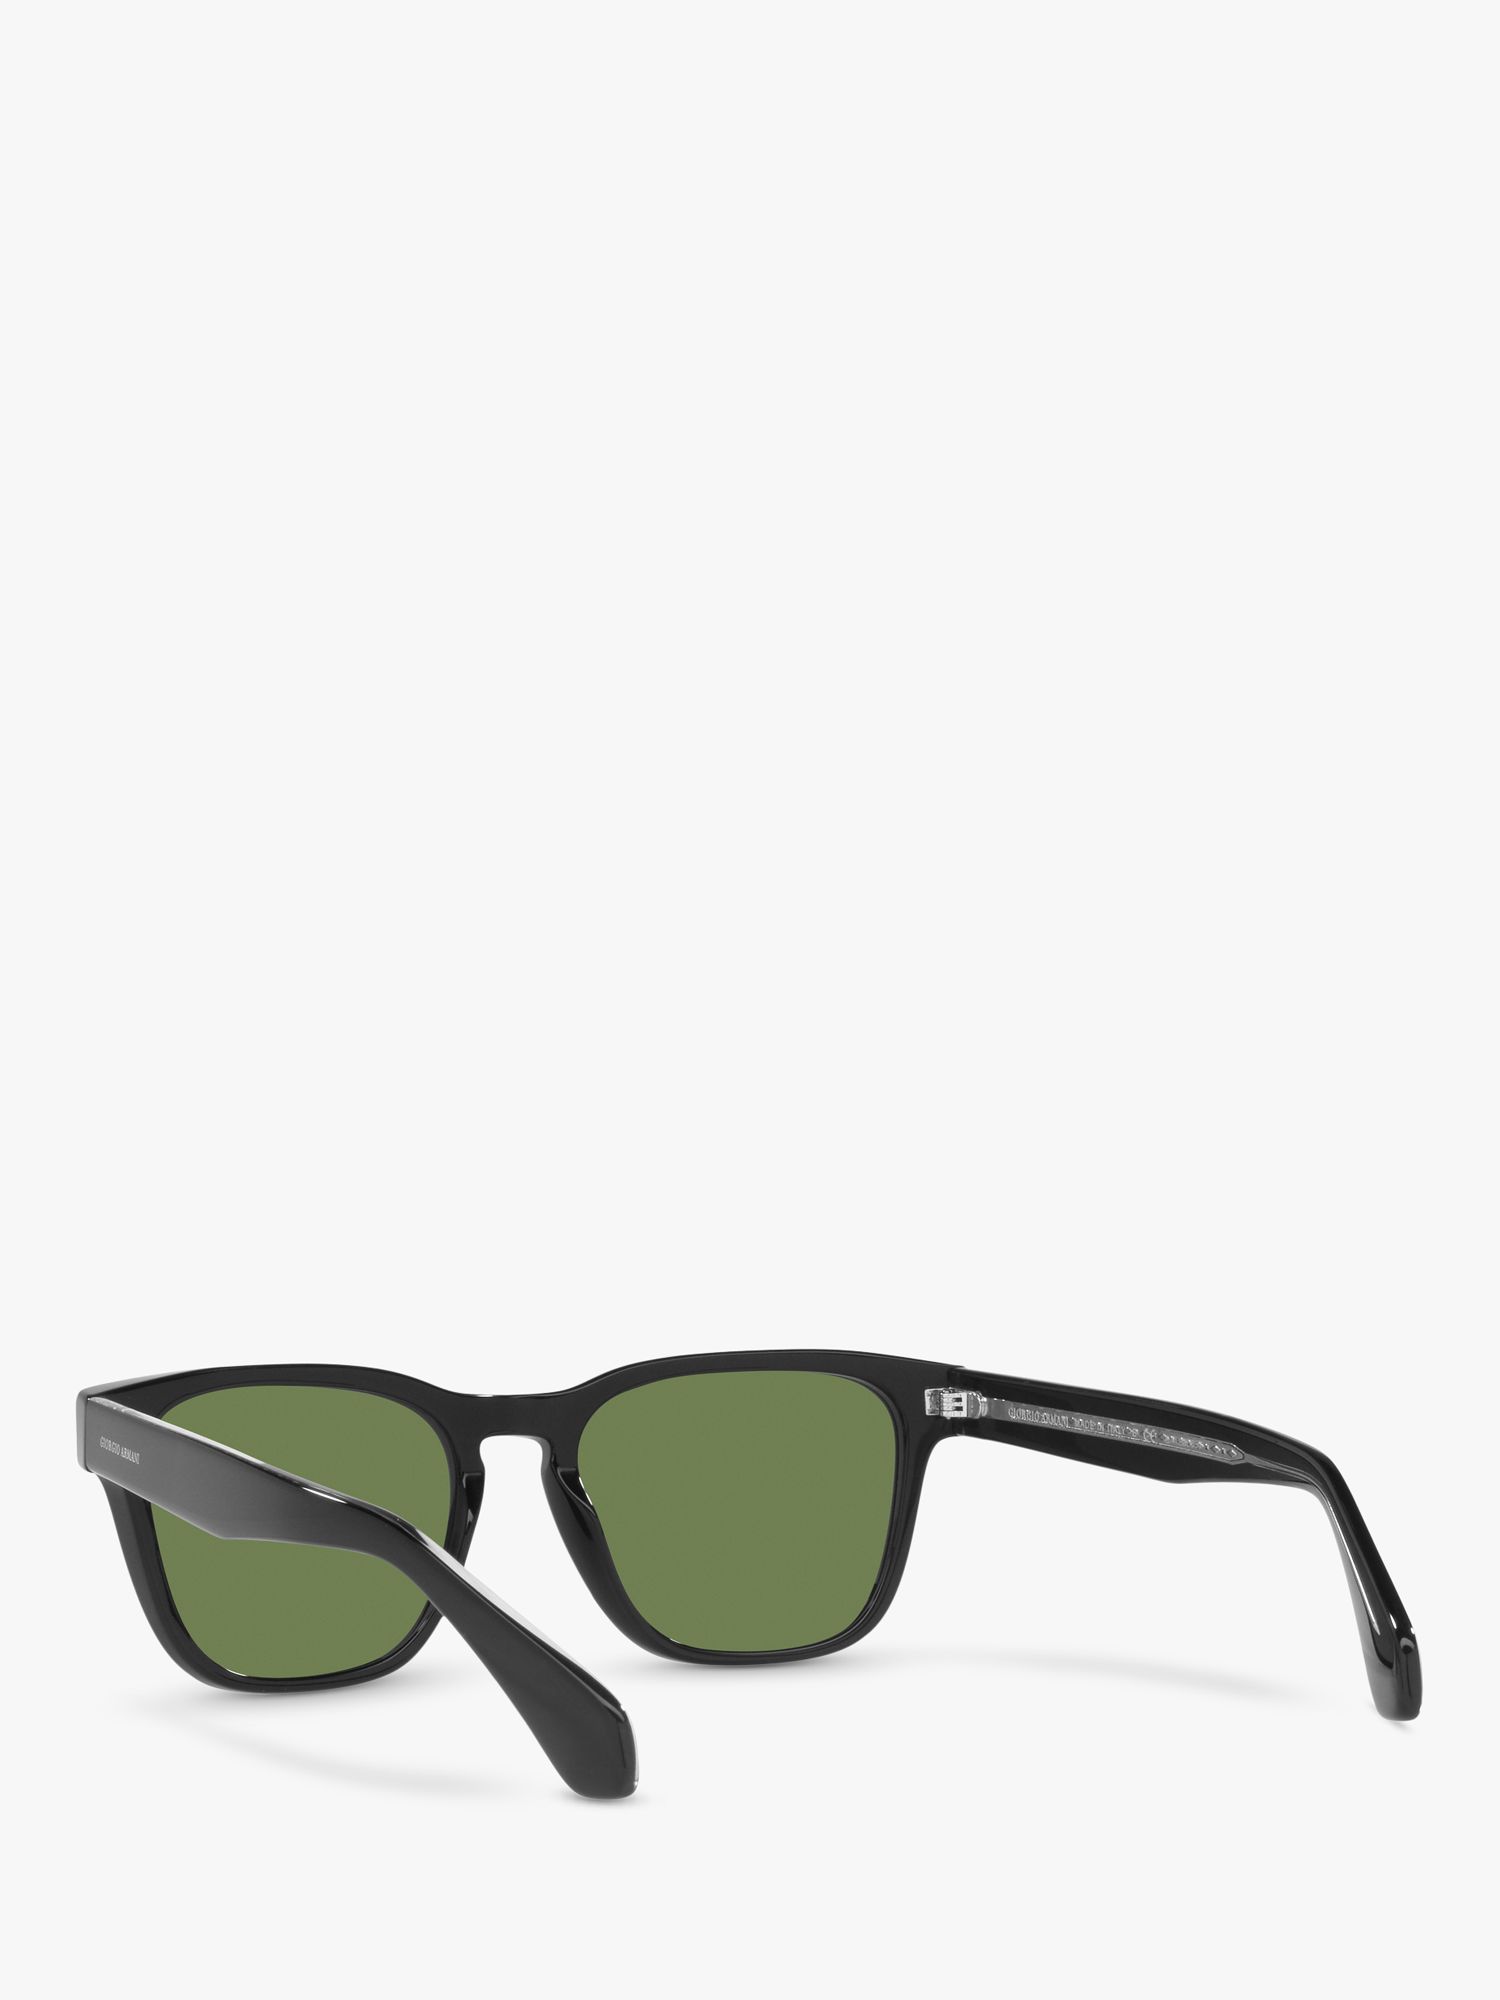 Giorgio Armani AR8155 Men's D-Frame Sunglasses, Black/Green at John Lewis &  Partners